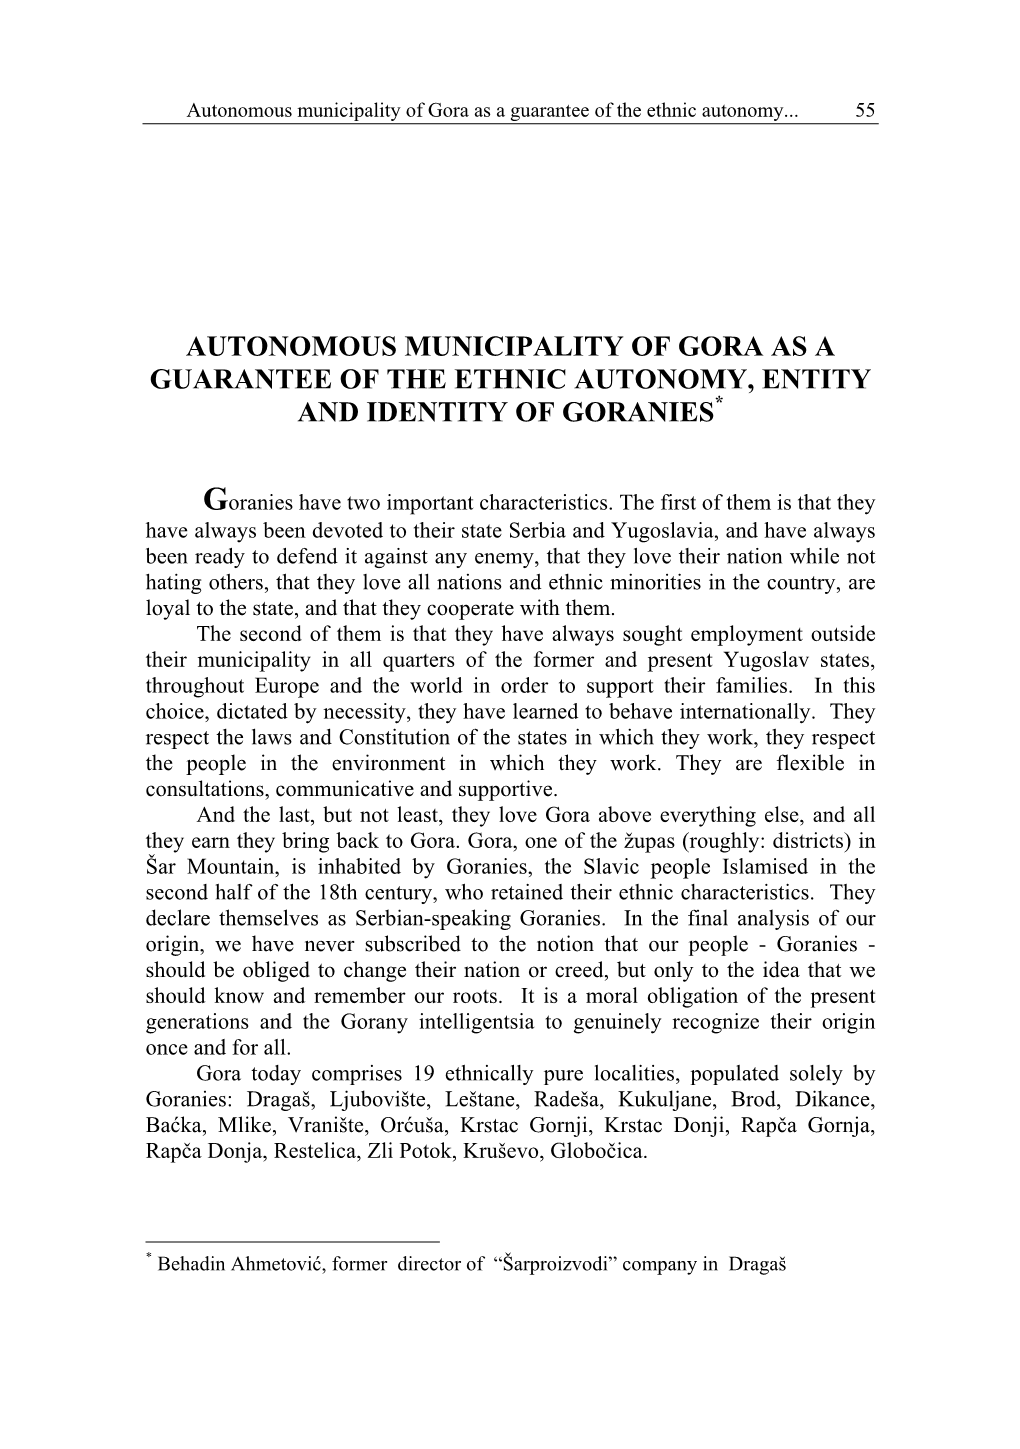 Autonomous Municipality of Gora As a Guarantee of the Ethnic Autonomy